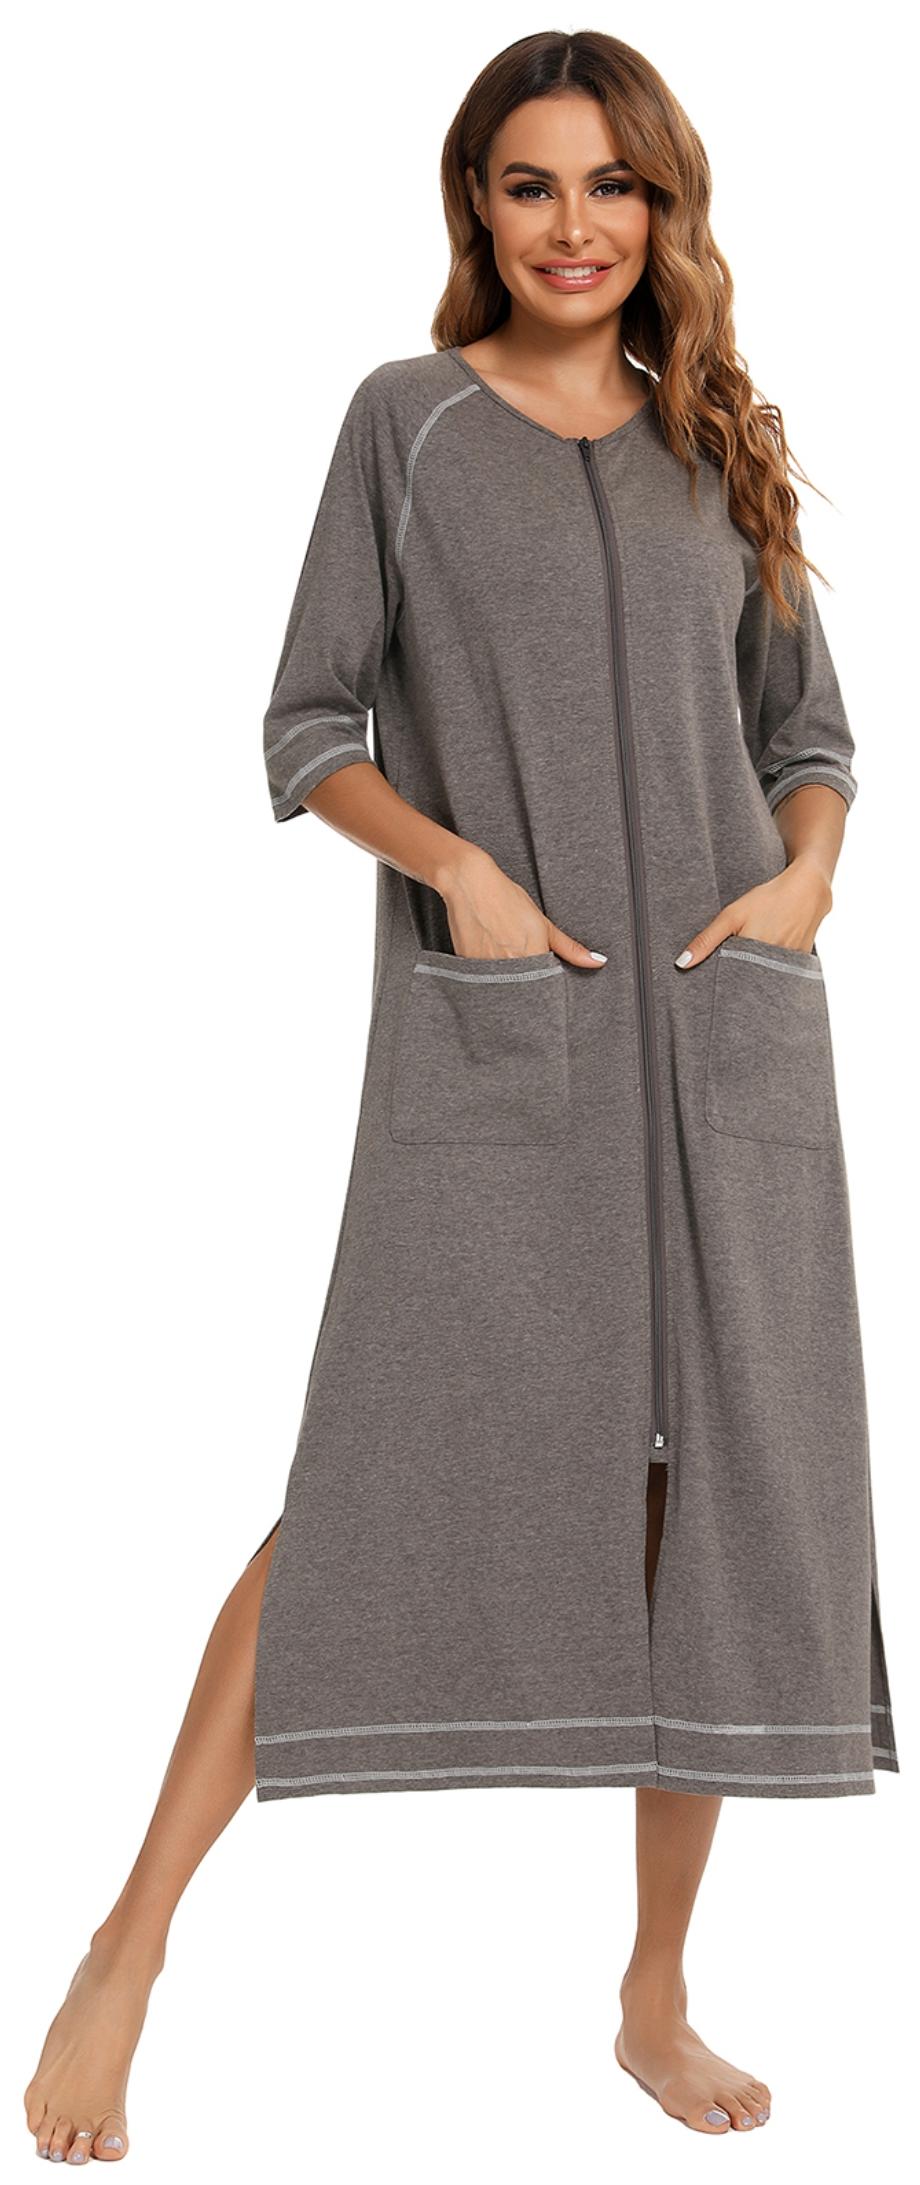 LOFIR Women Zipper Front Robes 3/4 Sleeve Loungewear Pockets Nightgown Loose-Fitting Ladies Long Sleepwear(Grey,L) - image 1 of 7